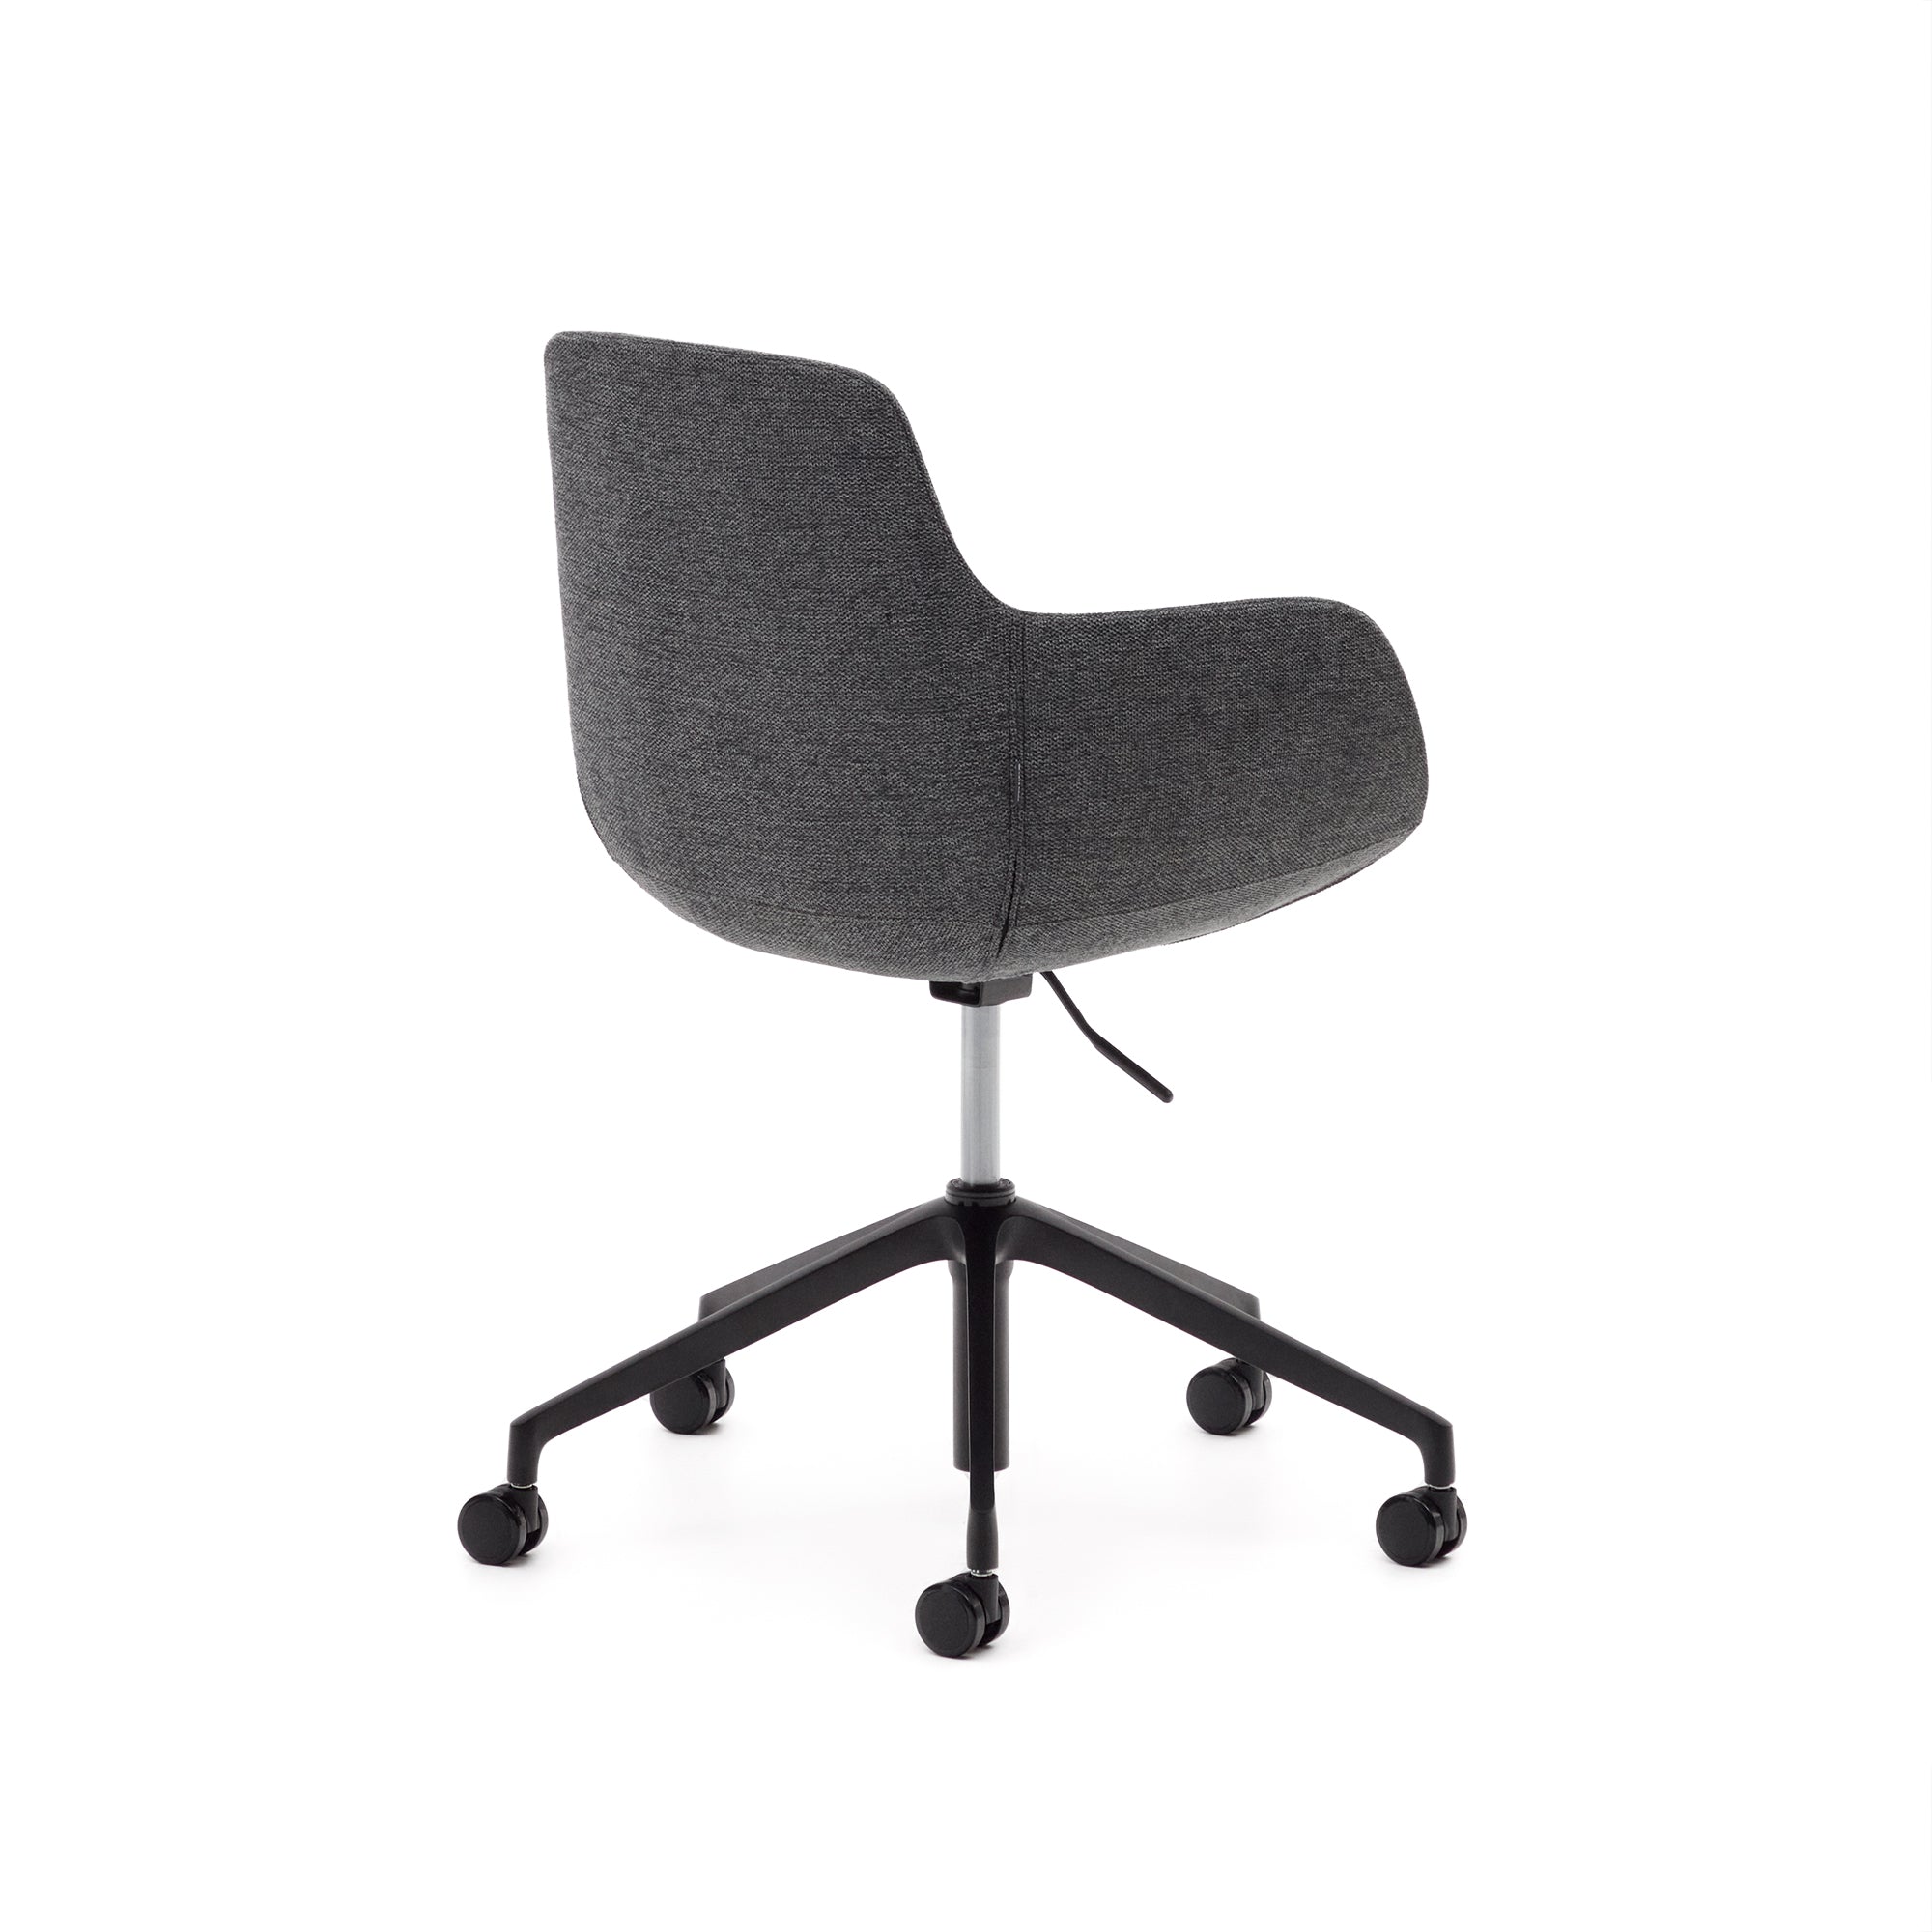 Tissiana dark grey and aluminium desk chair with matt black finish